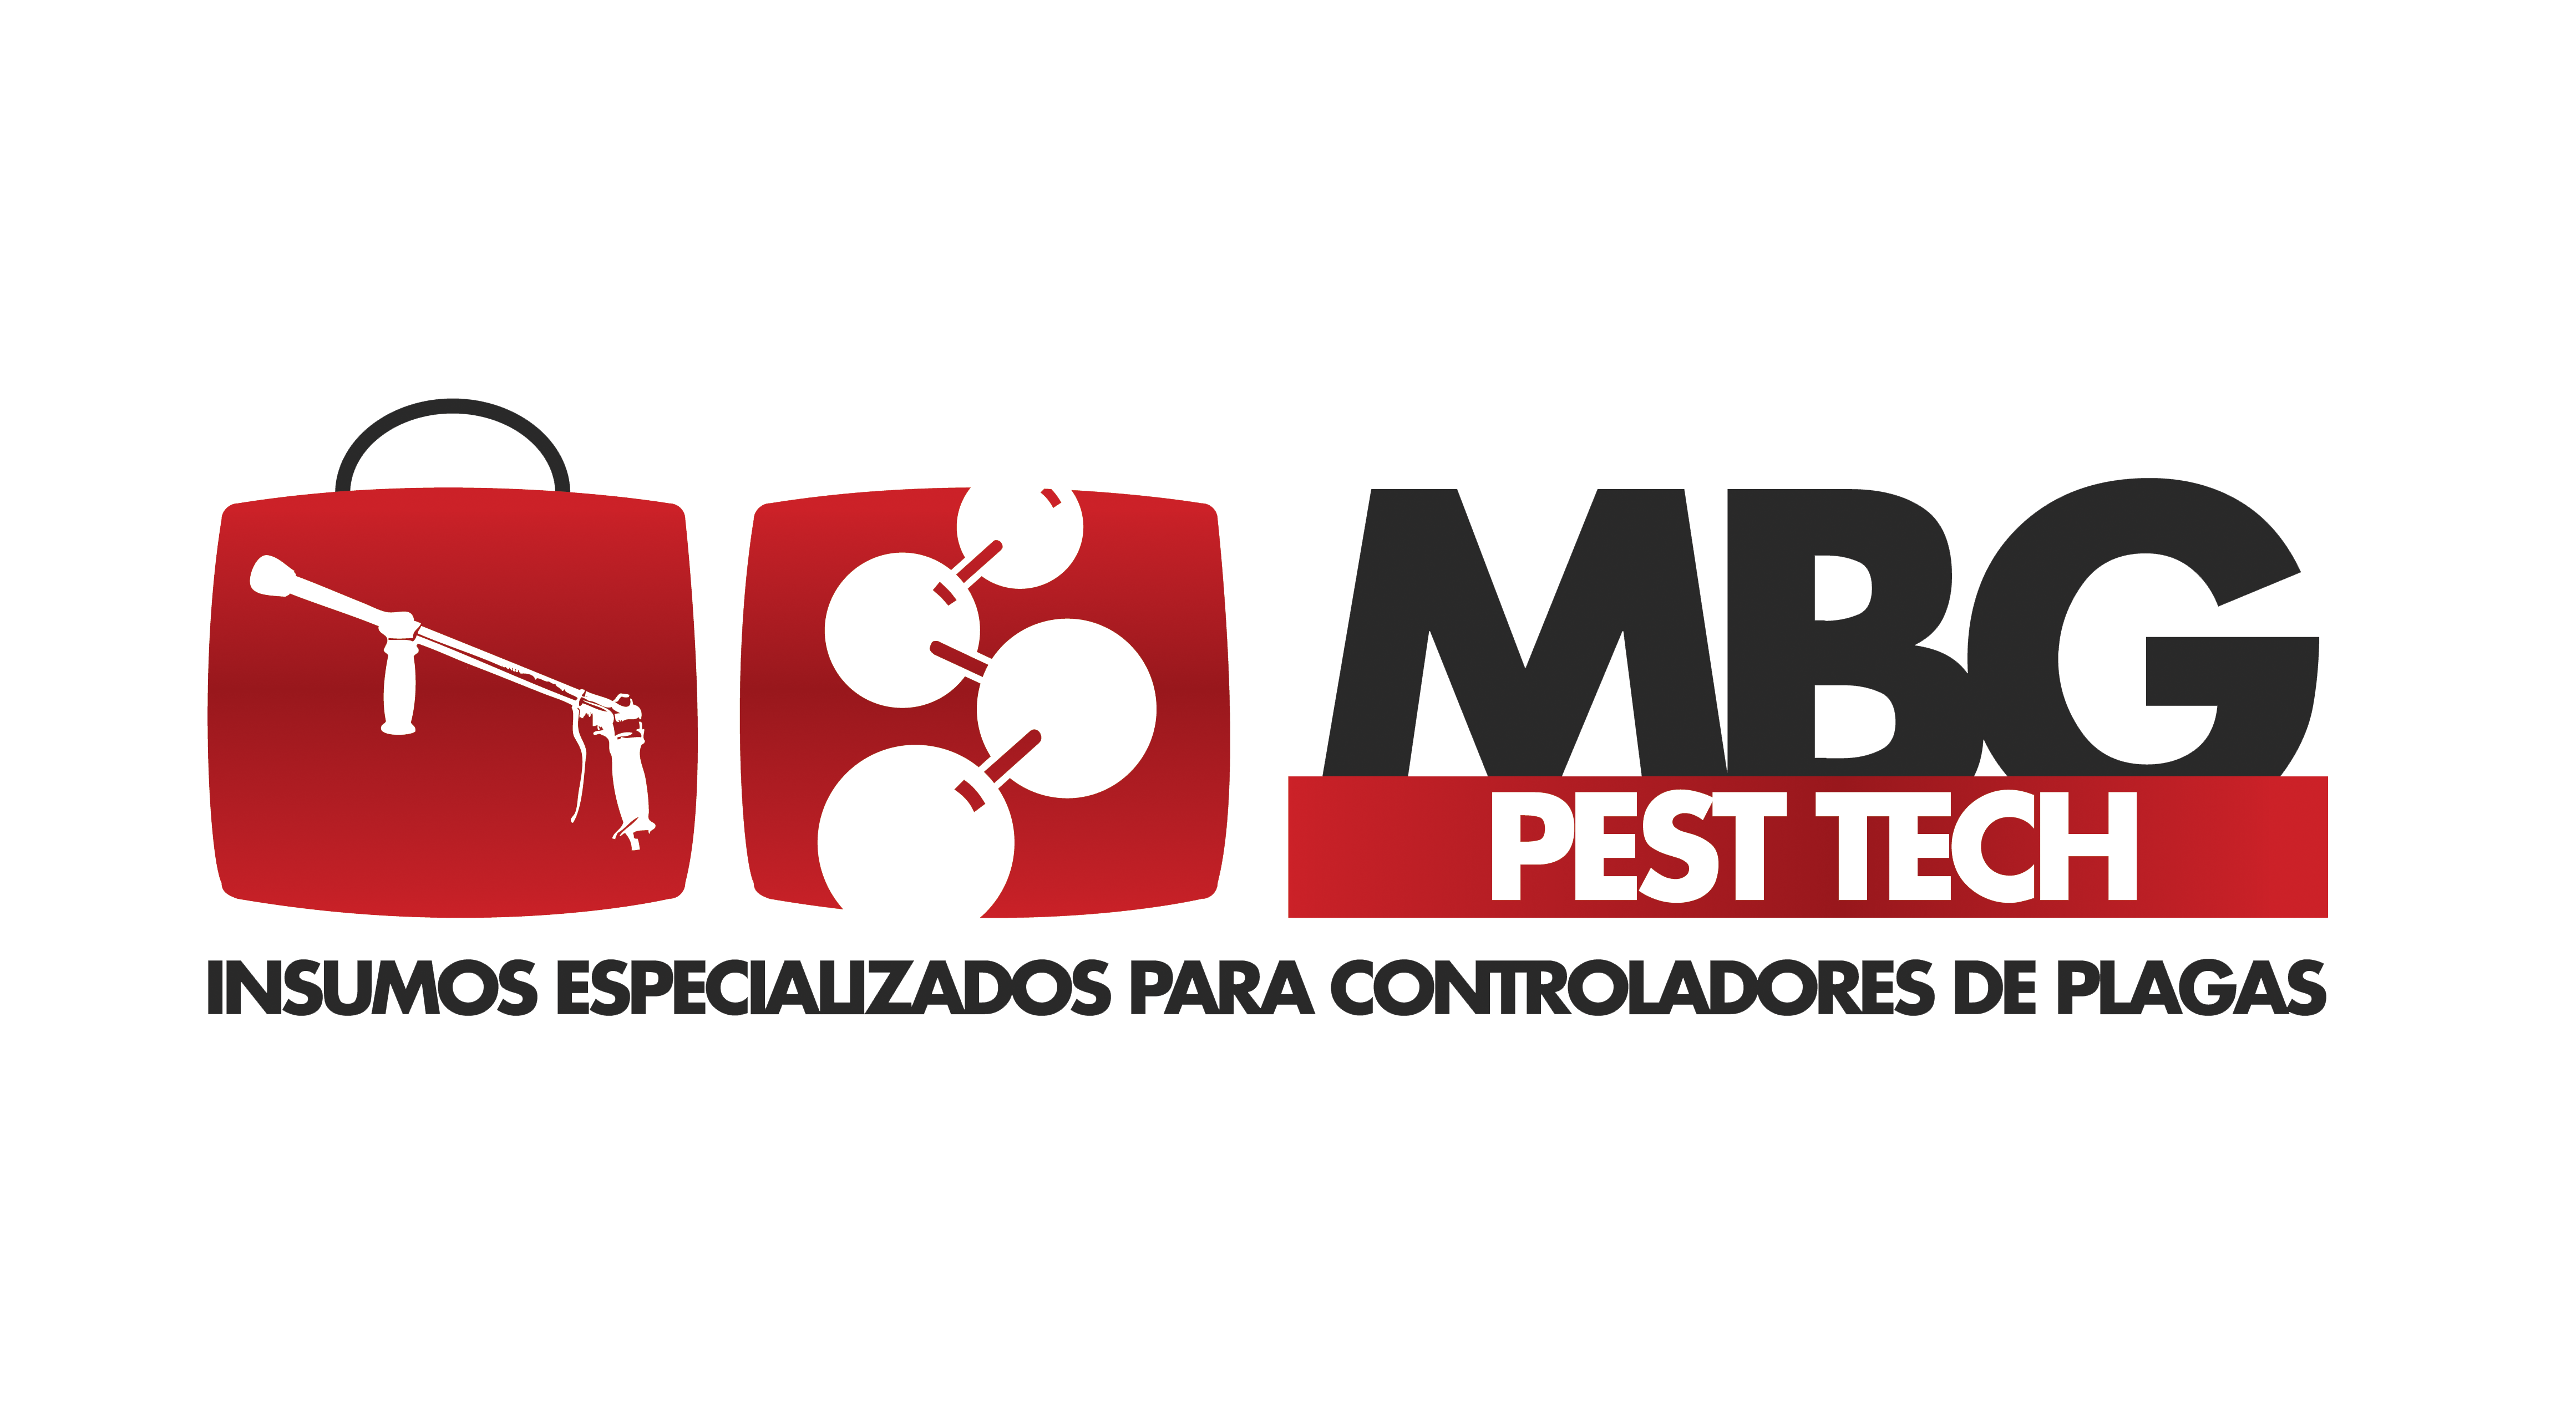 MBG Pest Tech